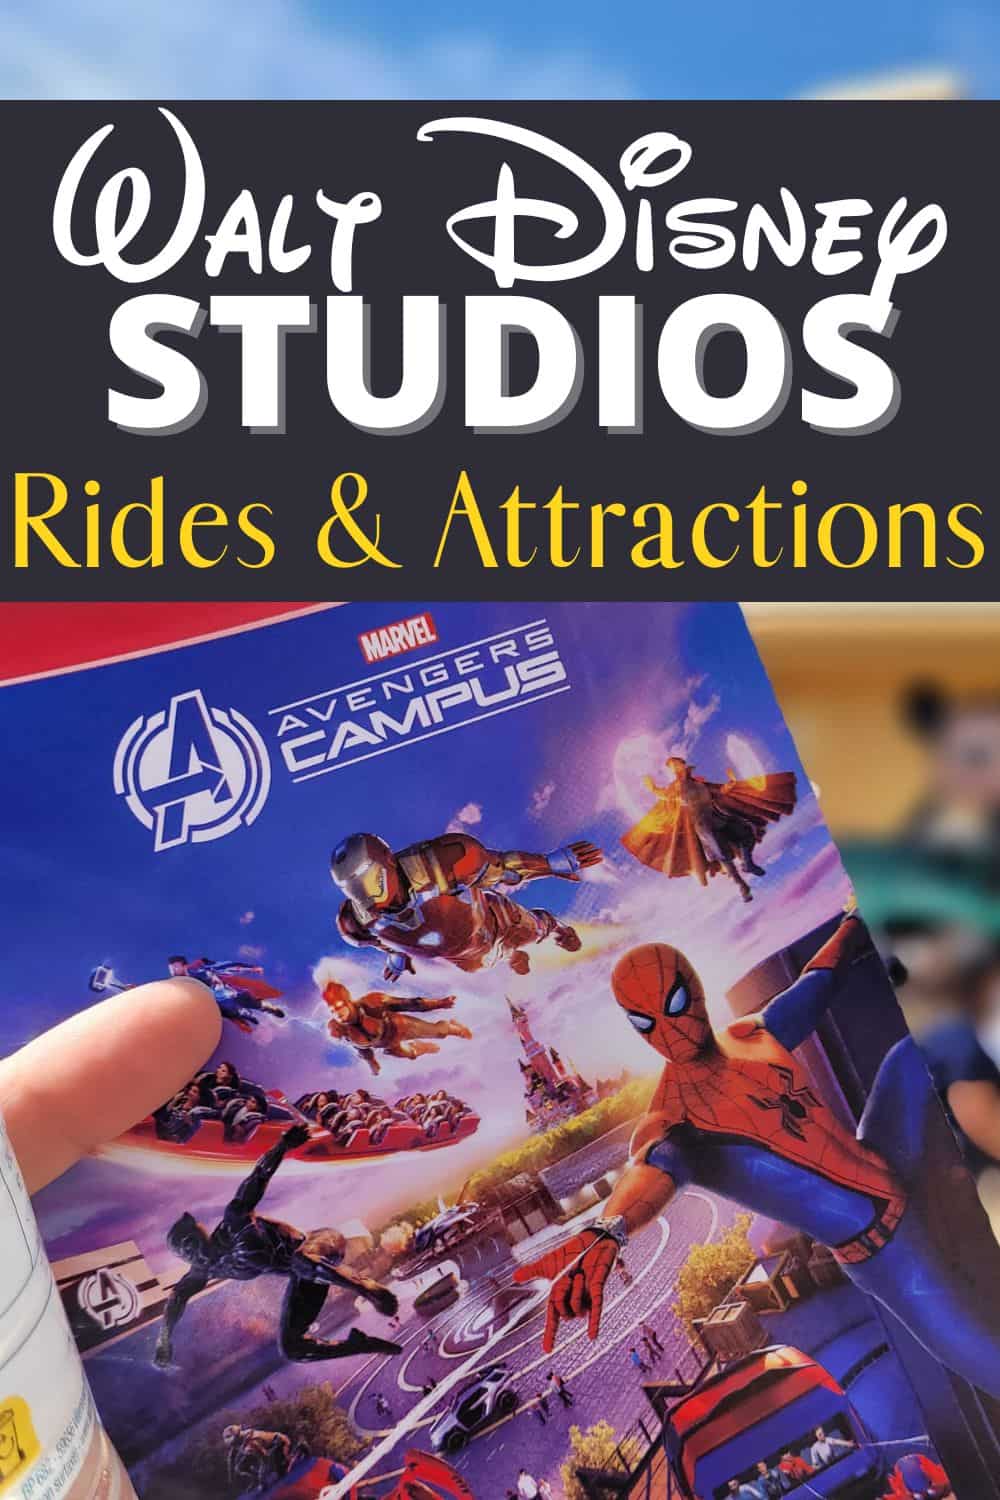 Best Walt Disney Studios Park Rides and Attractions